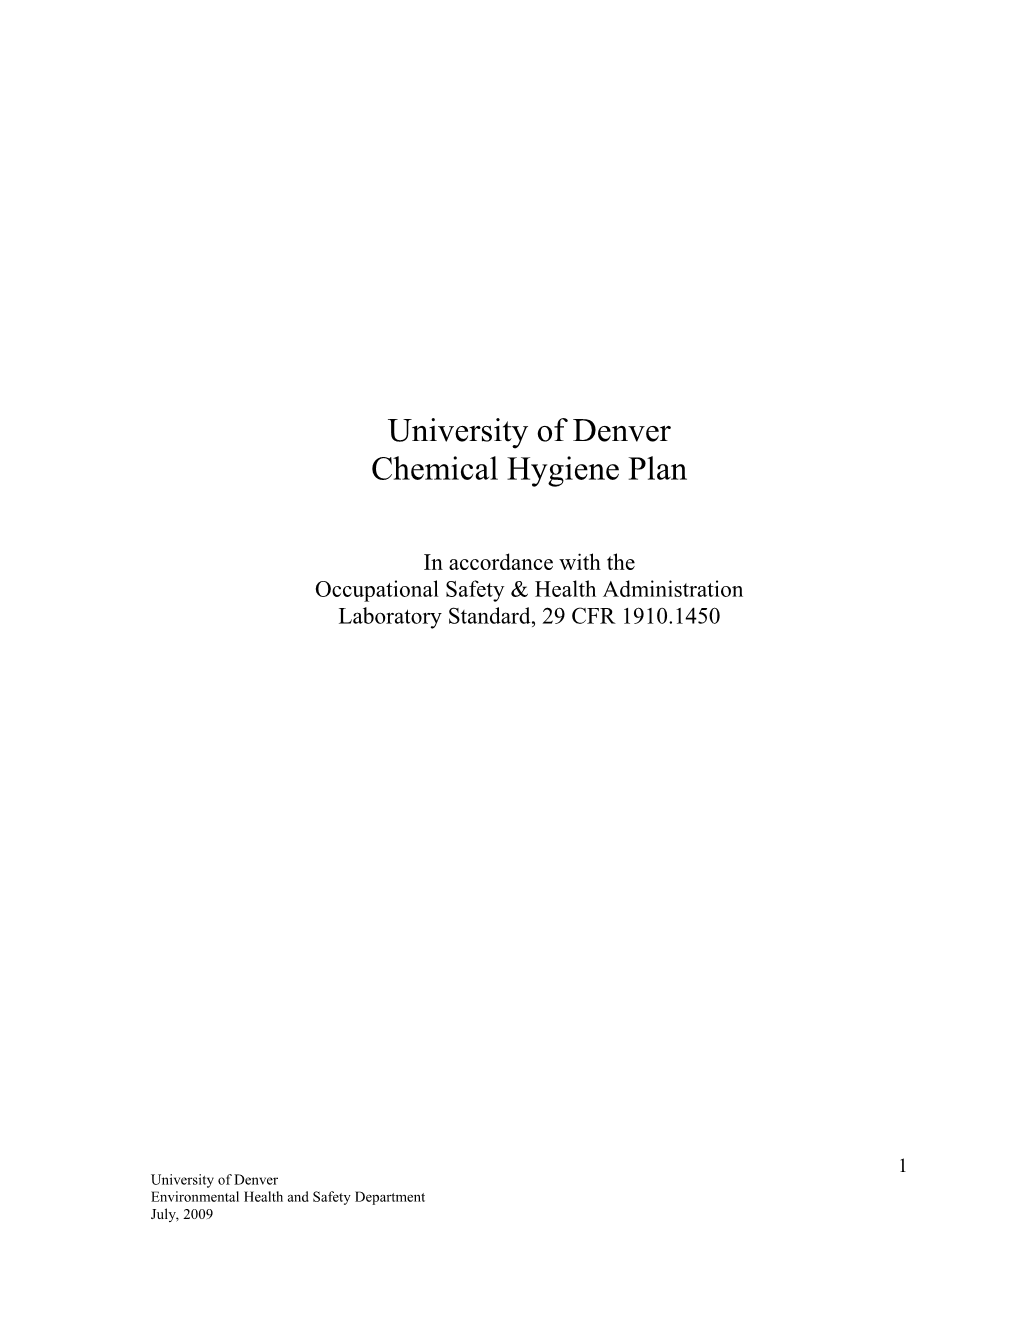 Chemical Hygiene Plan Outline